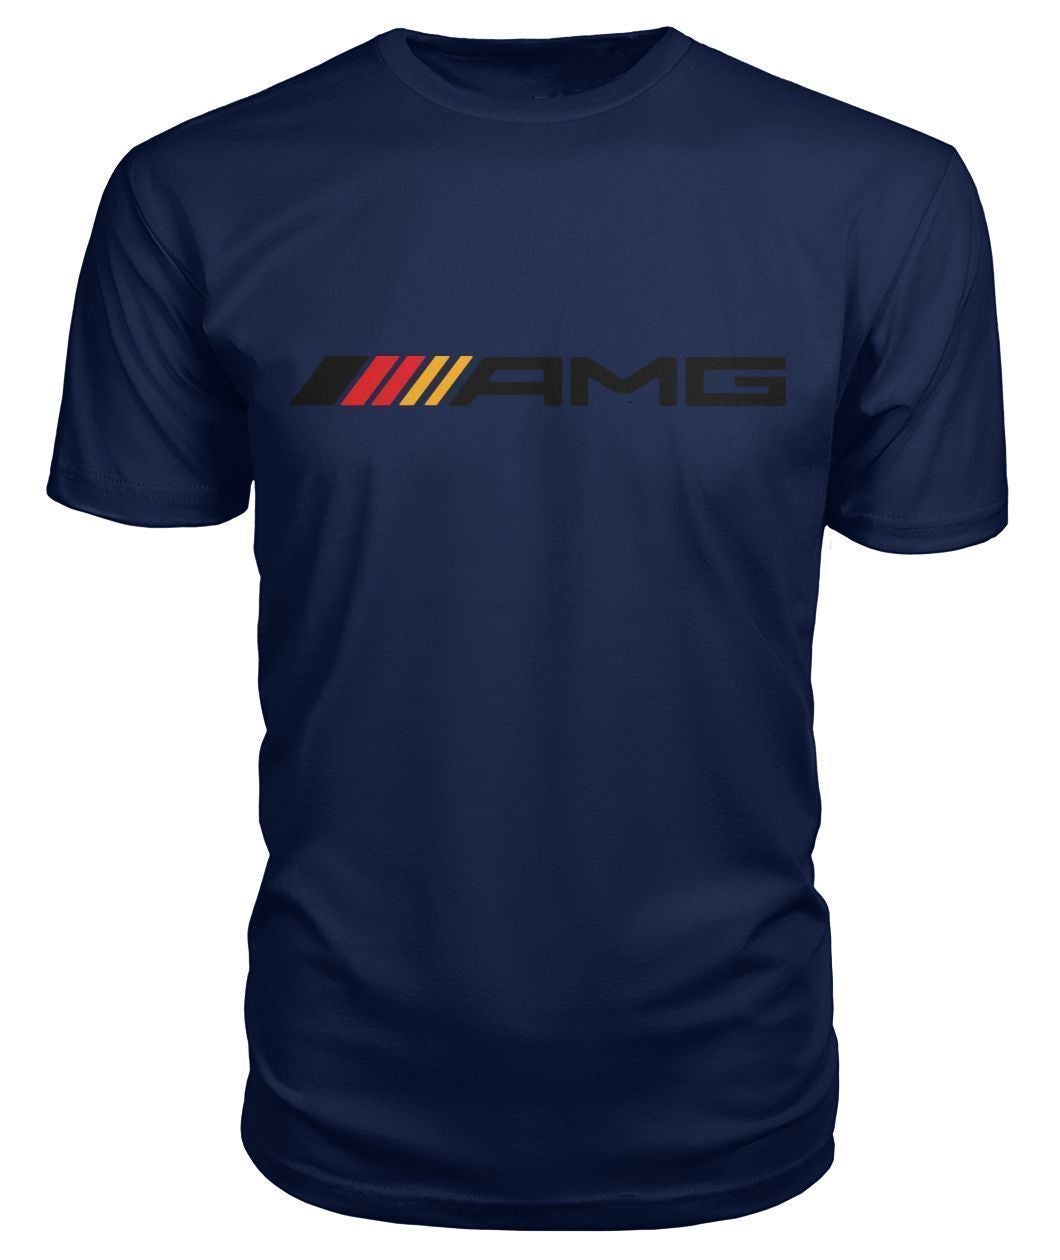 AMG Premium T-Shirt